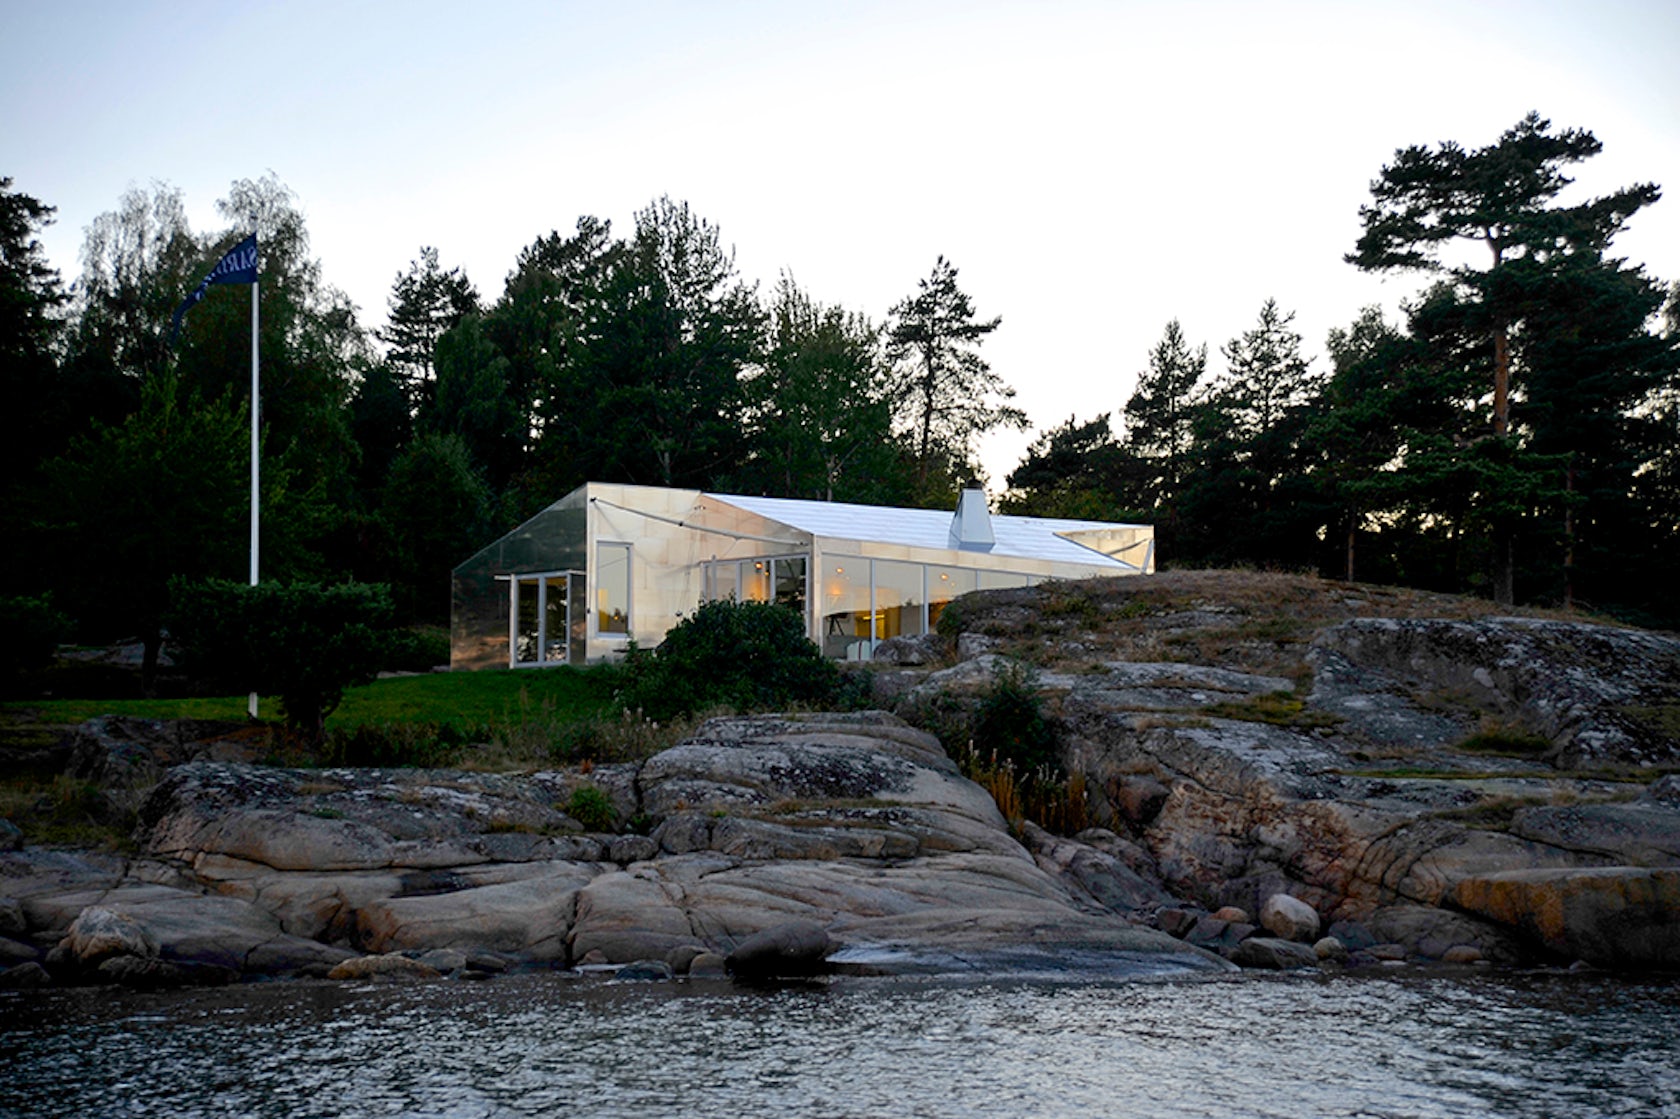 The Aluminum Cabin by Jarmund/Vigsnæs Architects